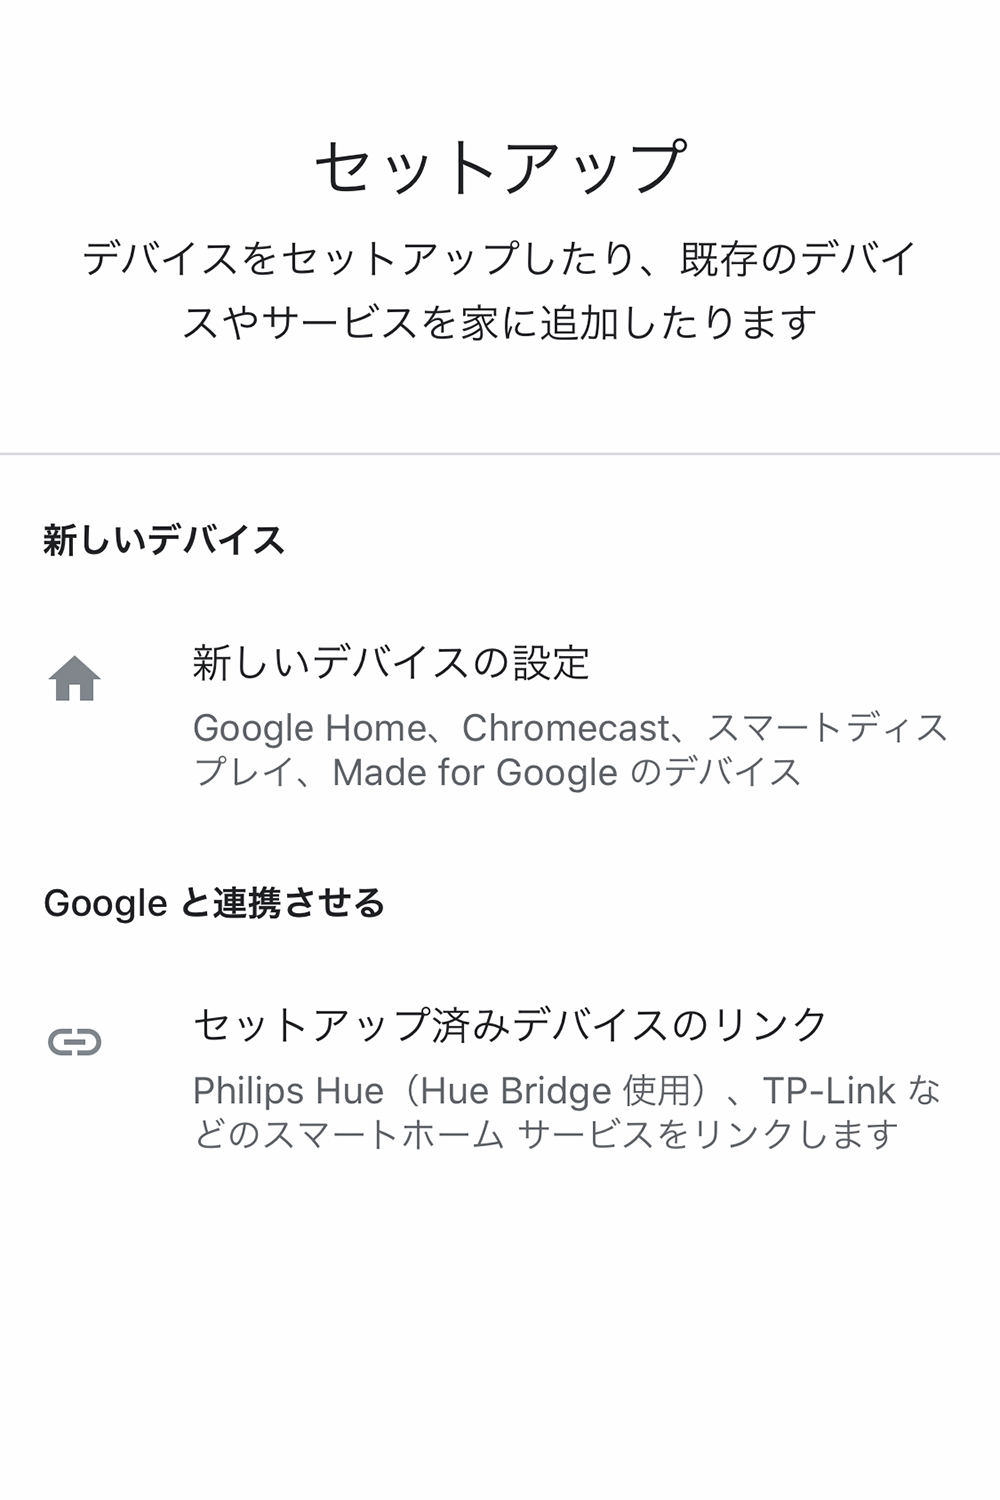 Google Home アプリのセットアップ画面